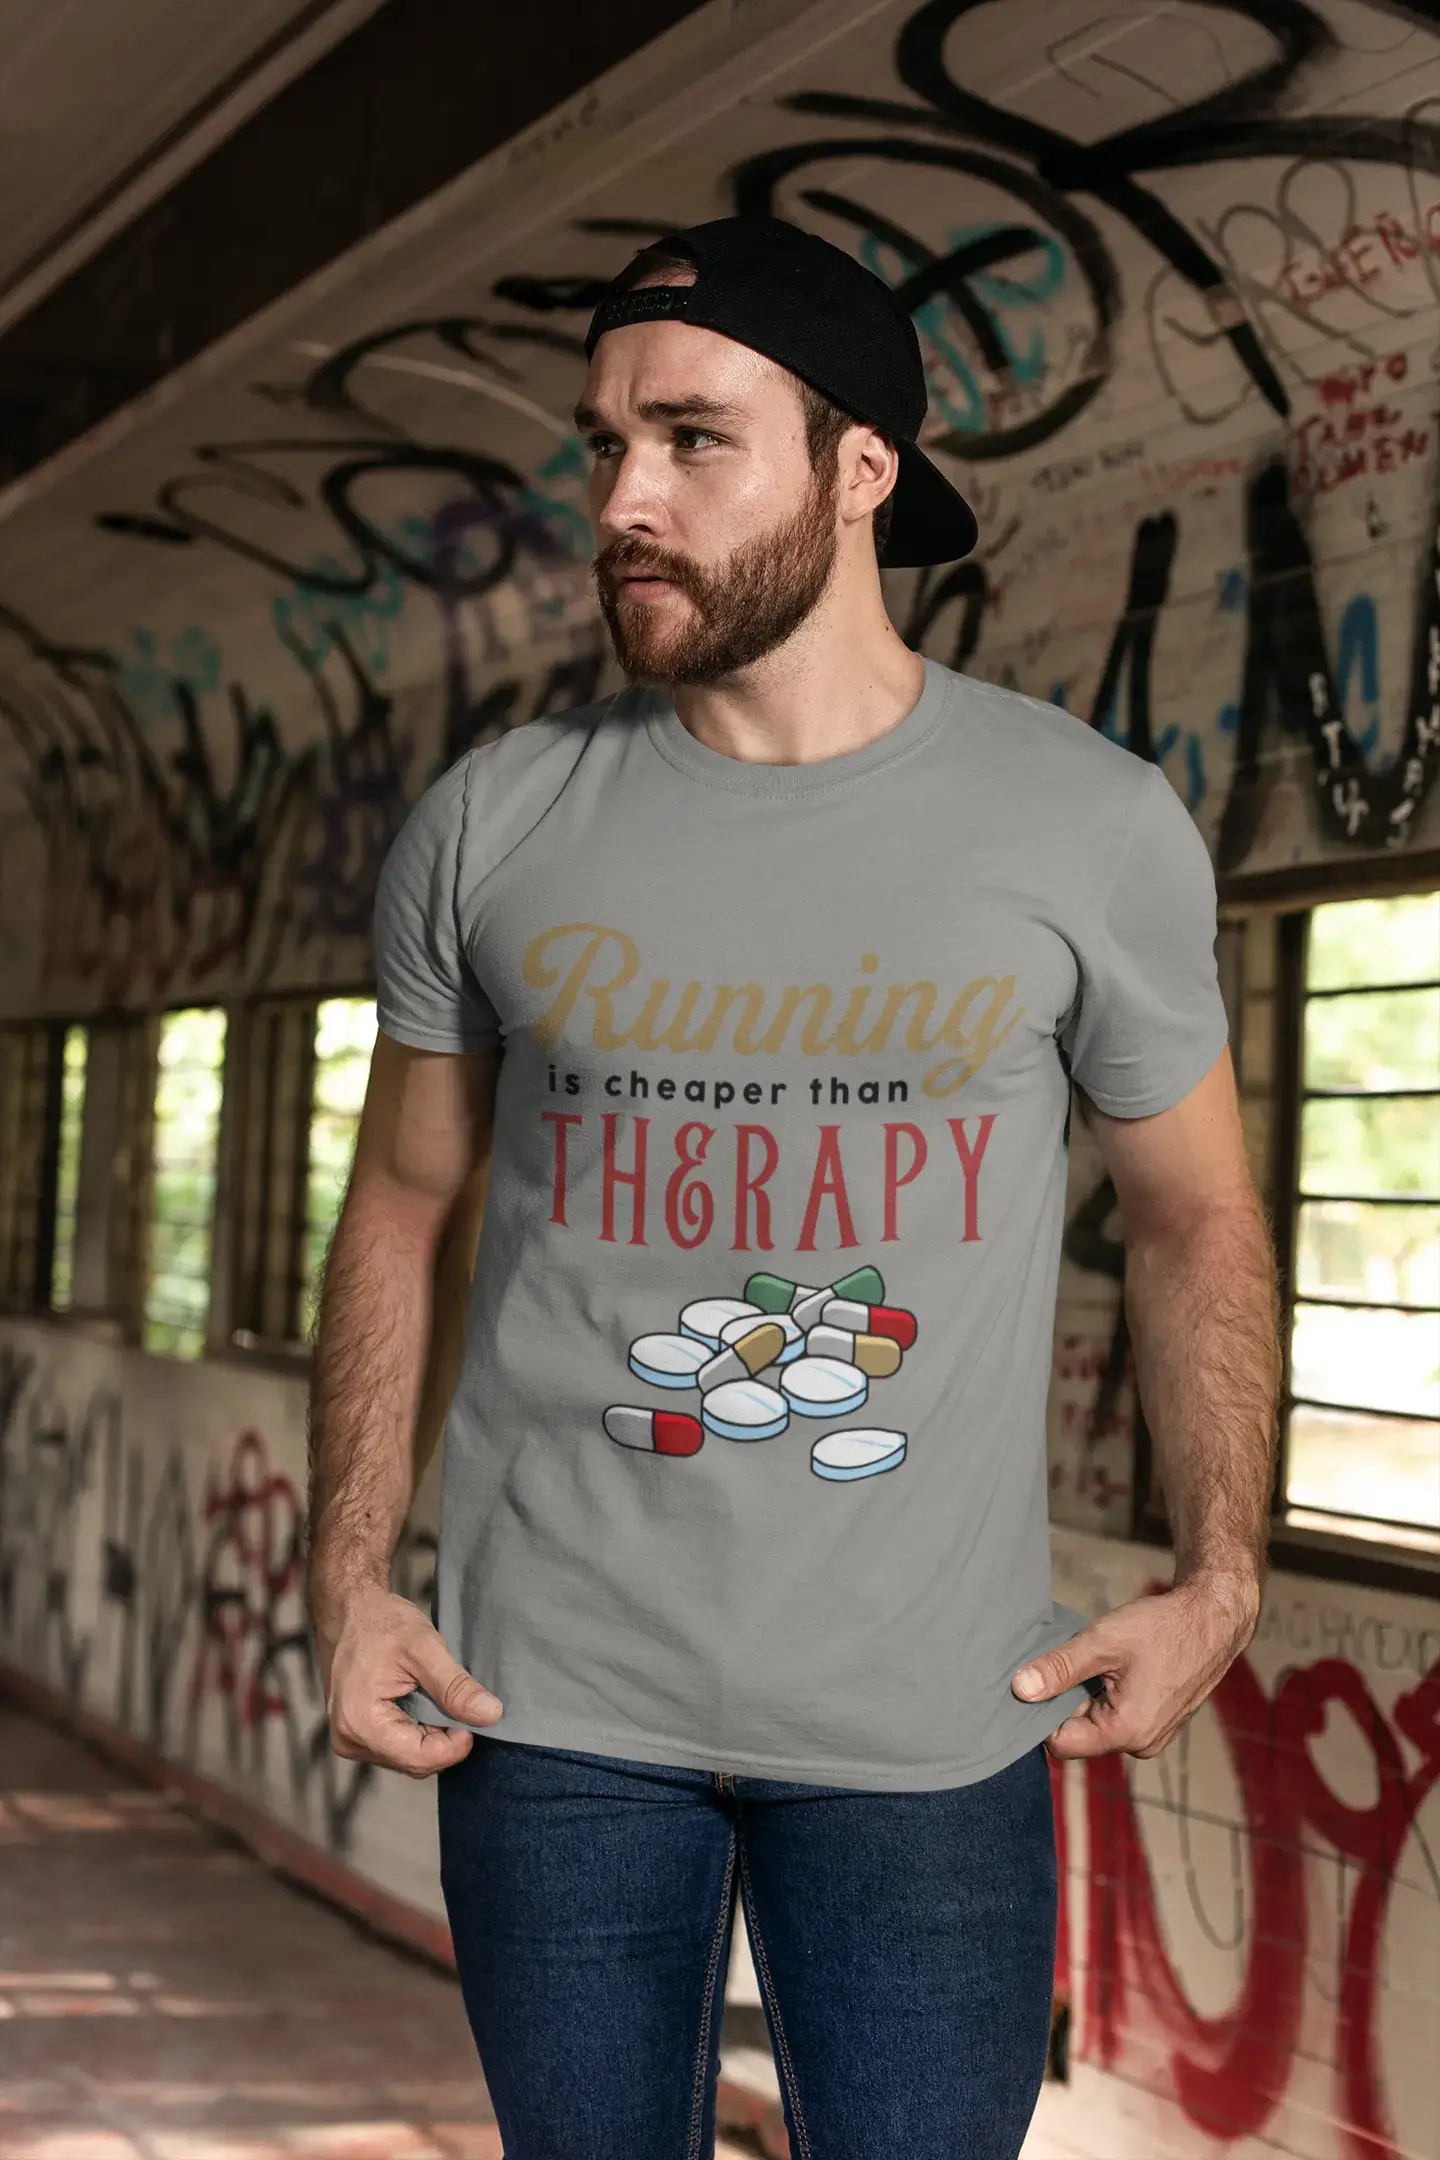 ULTRABASIC Men's Novelty T-Shirt Running is Cheaper than Therapy - Funny Runner Tee Shirt